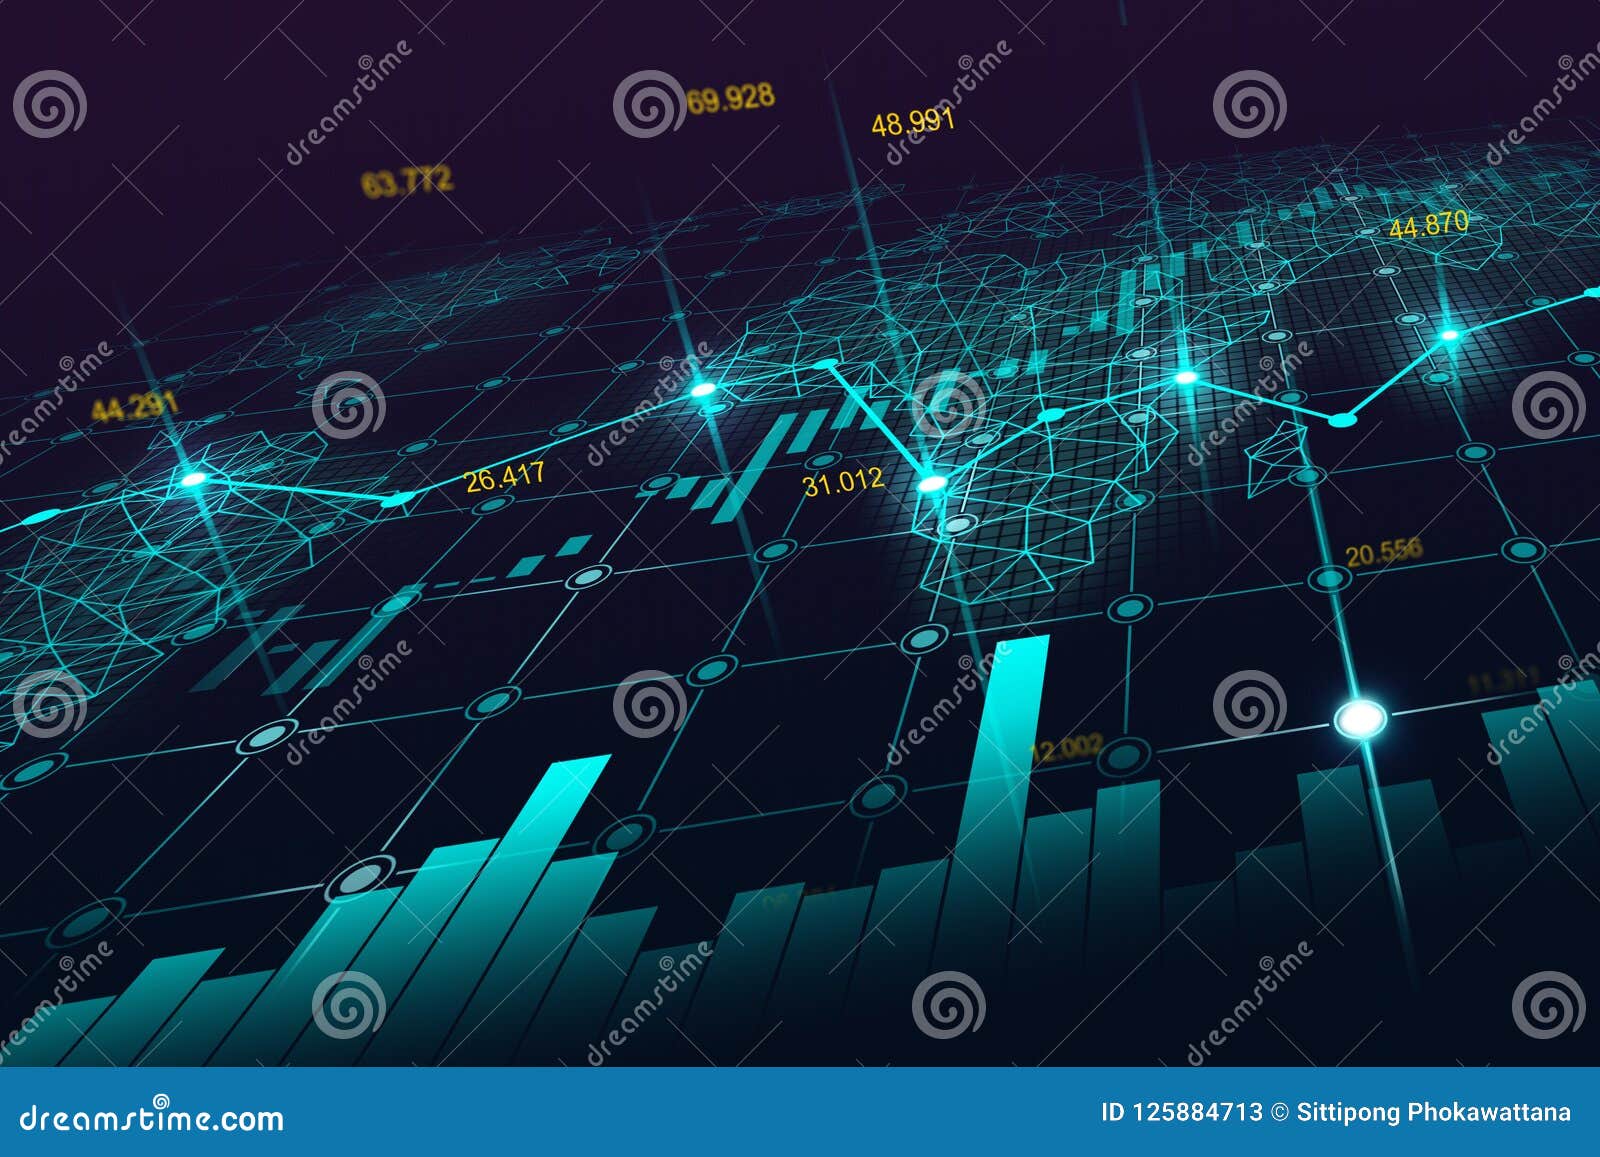 stock market or forex trading graph in futuristic concept